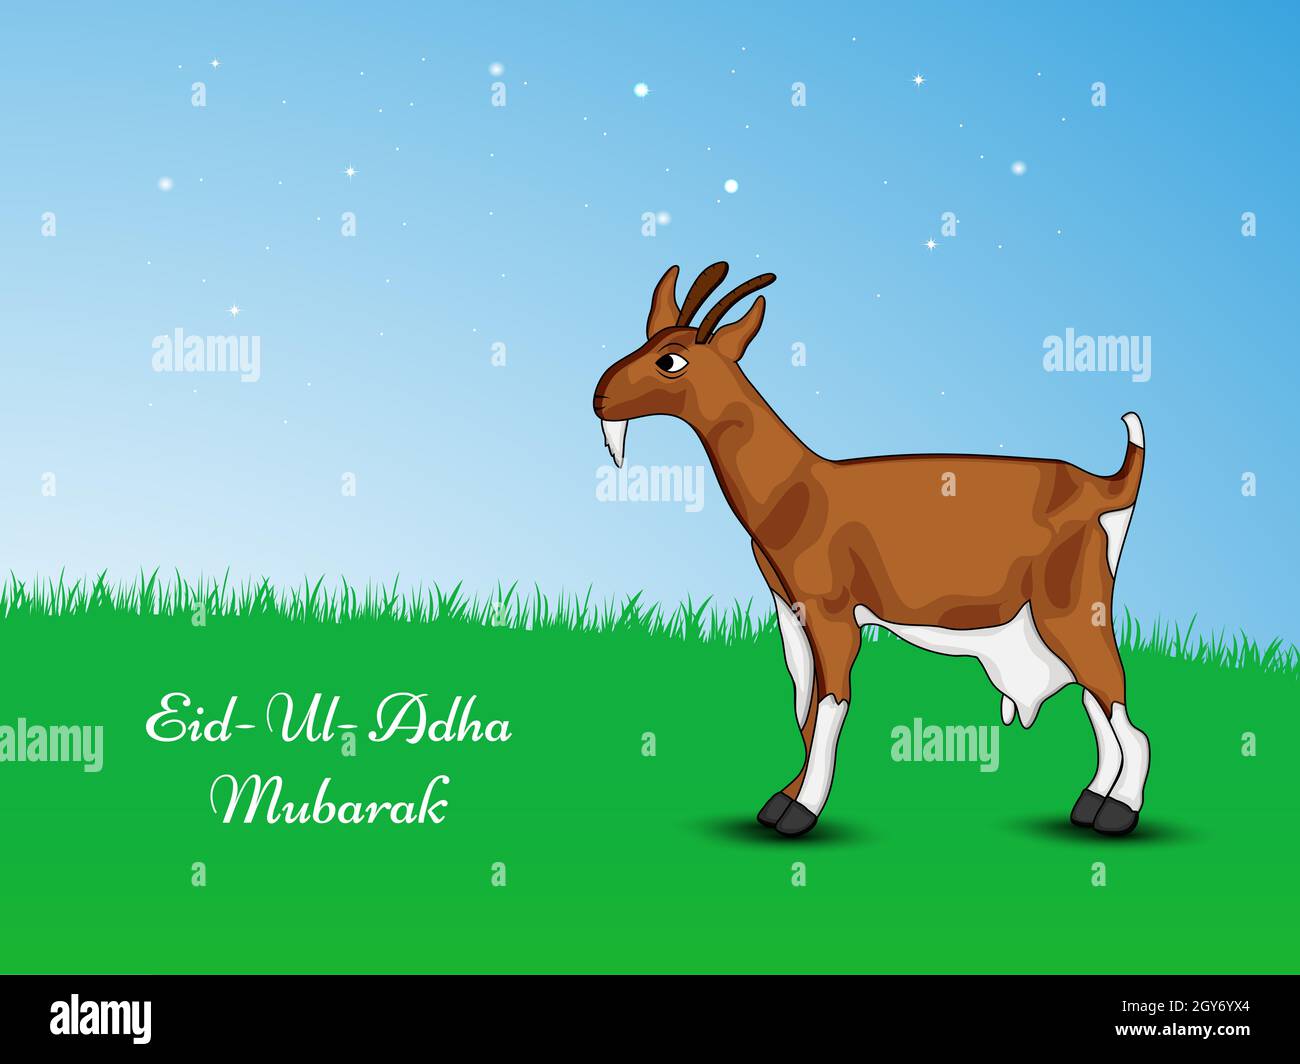 Eid ul adha Mubarak Stock Photo - Alamy